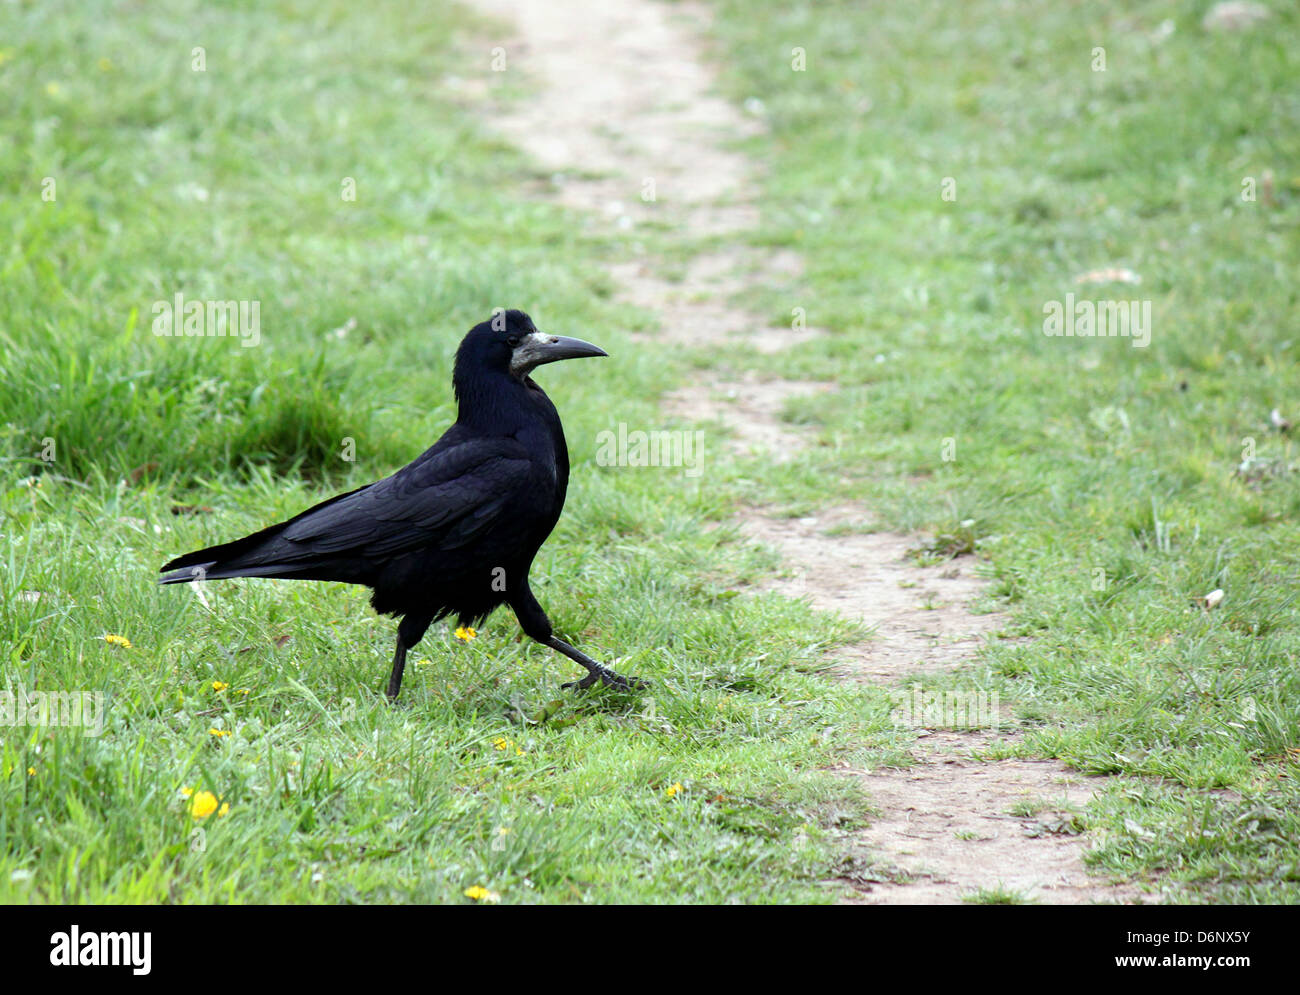 black raven walking in grass Stock Photo